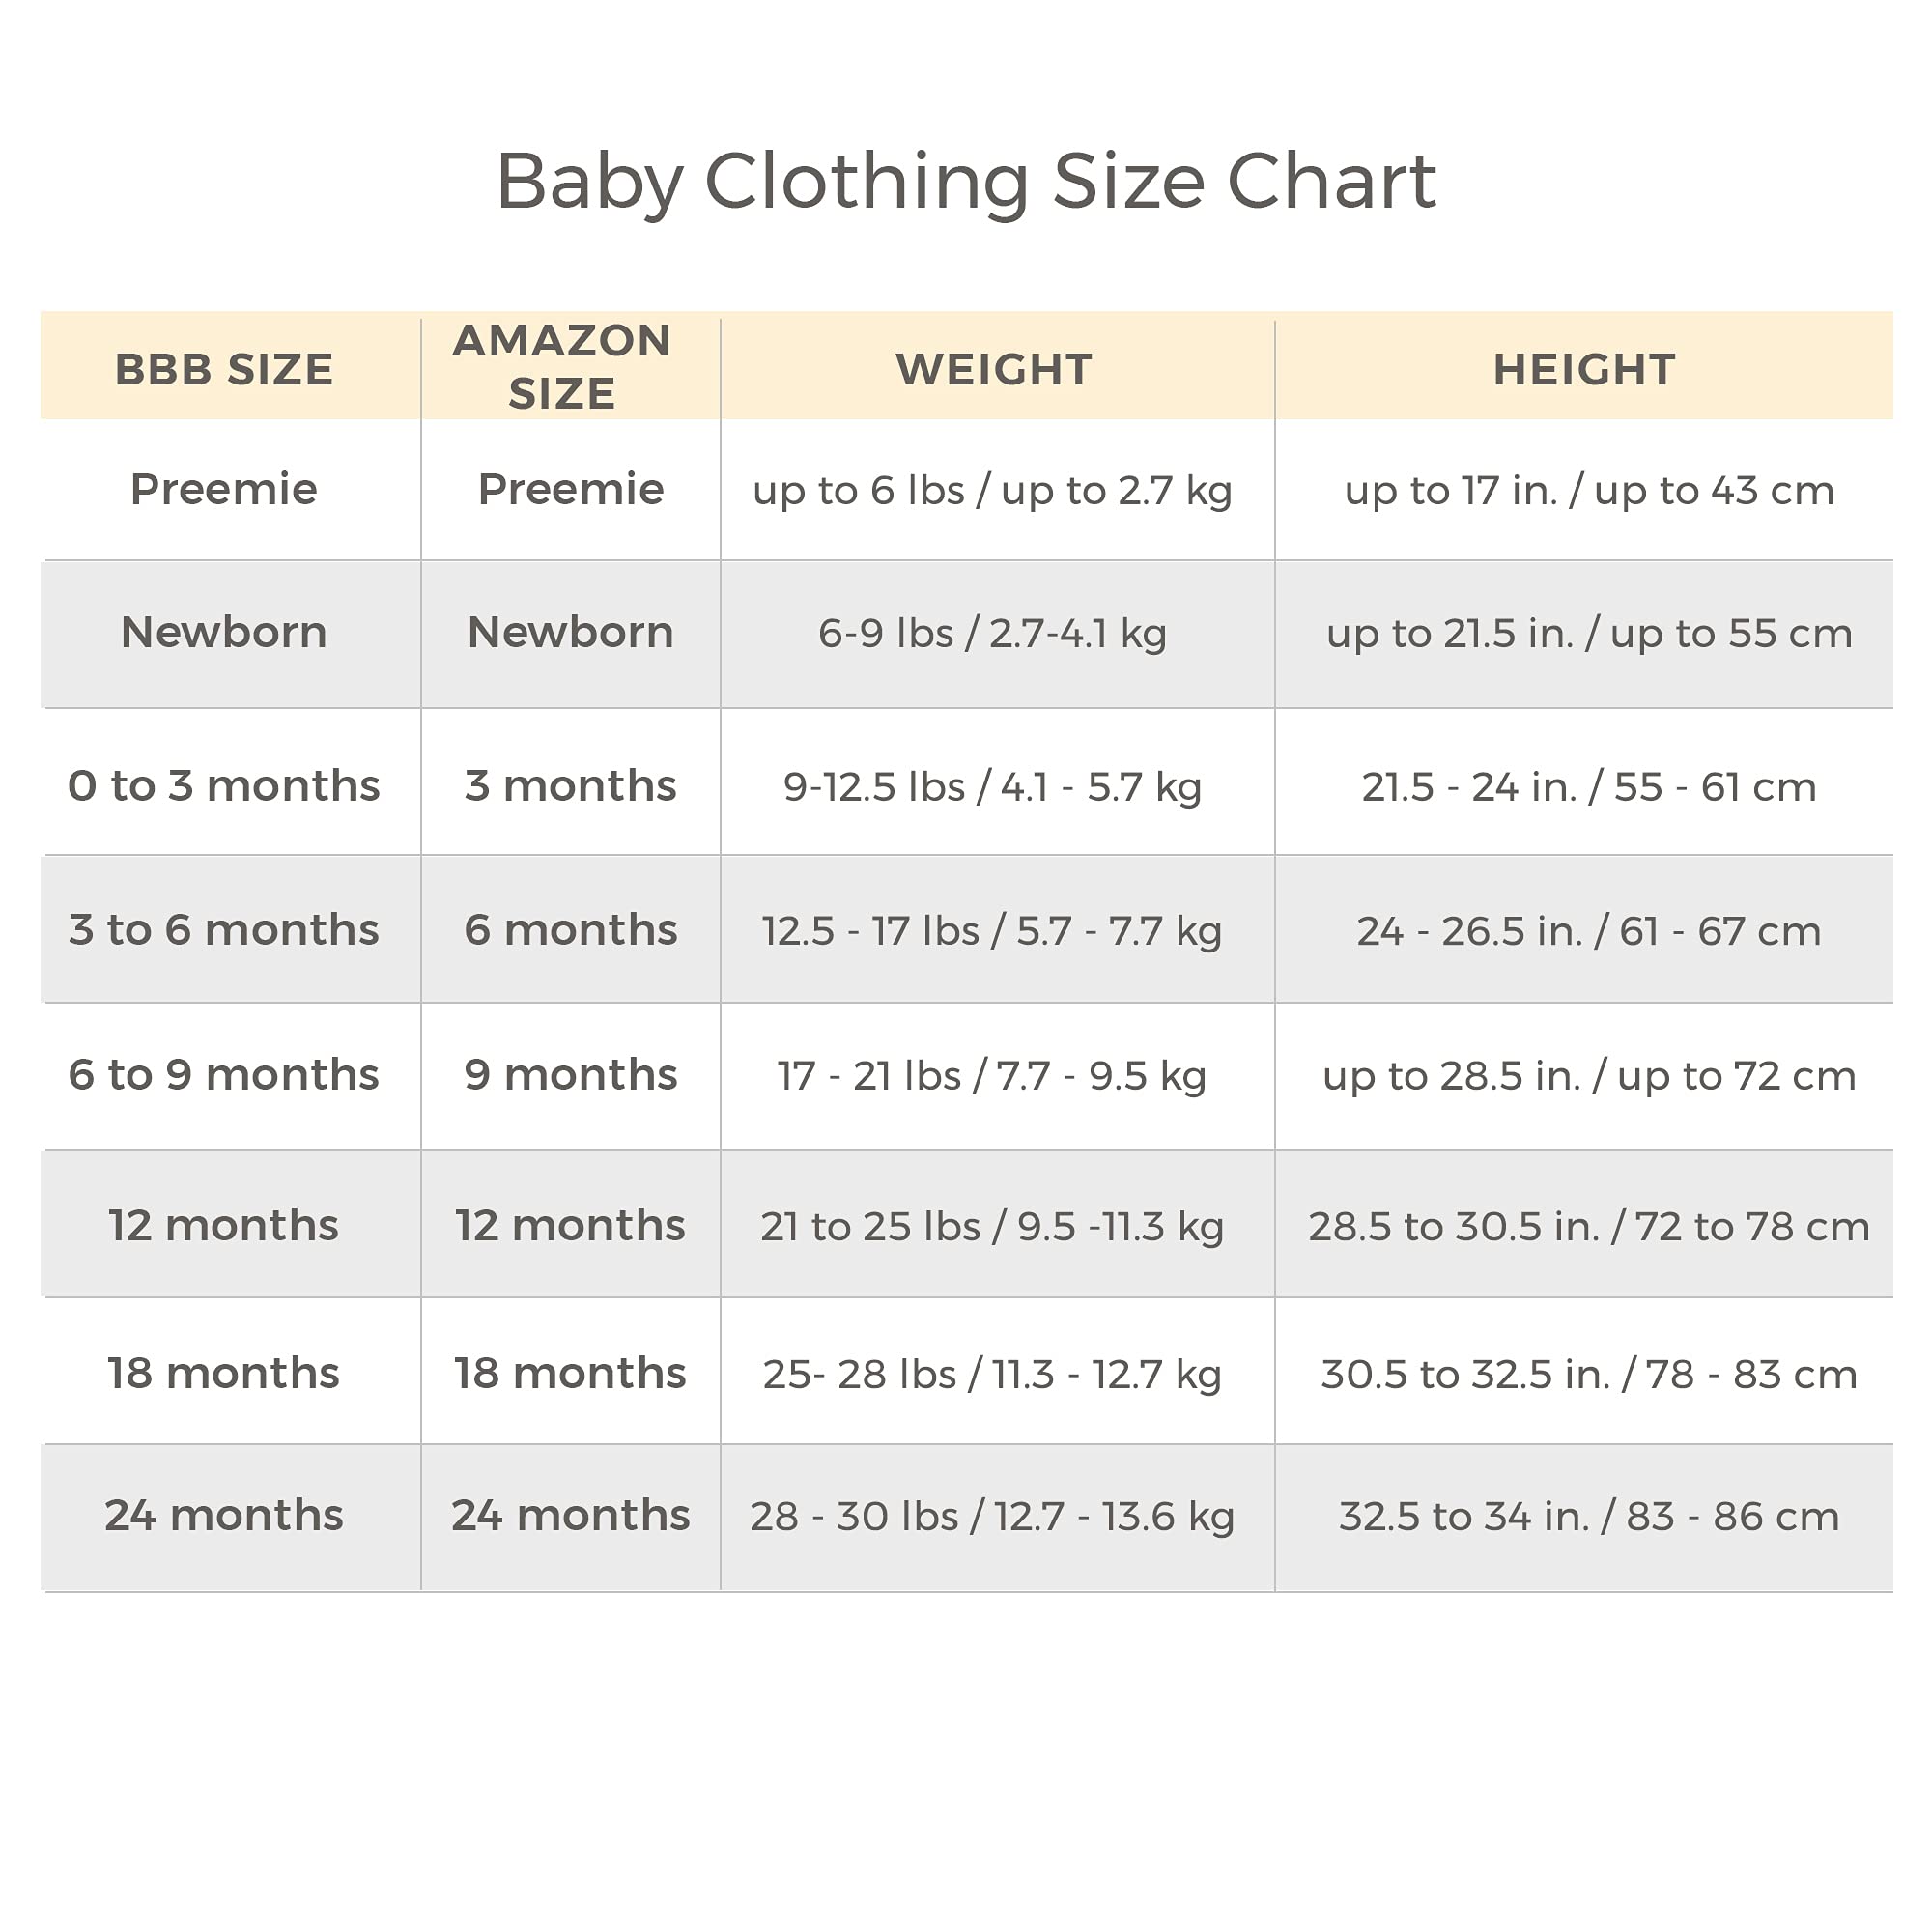 Burt's Bees Baby Unisex Baby Bodysuit & Pant Set, 100% Organic Cotton, Cozy Time, Newborn